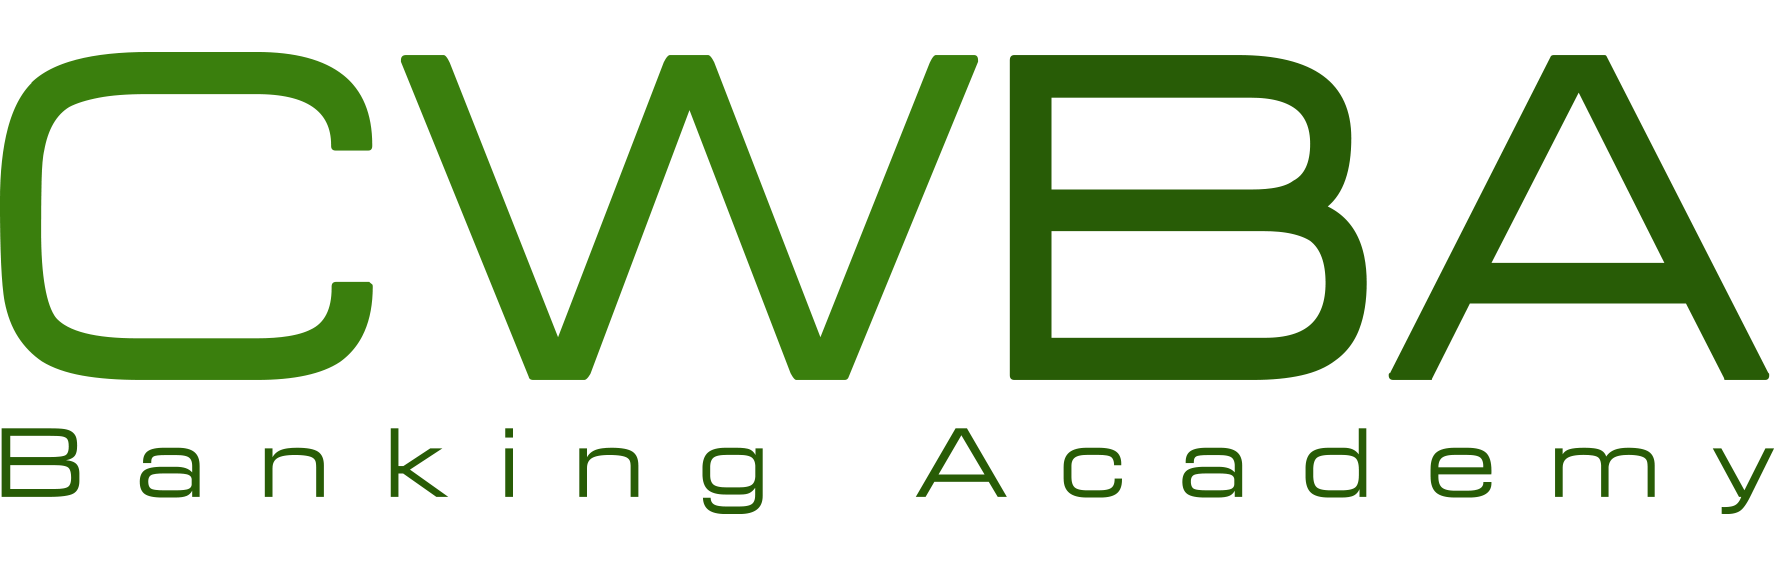 CWBA CodiceWeb Banking Academy